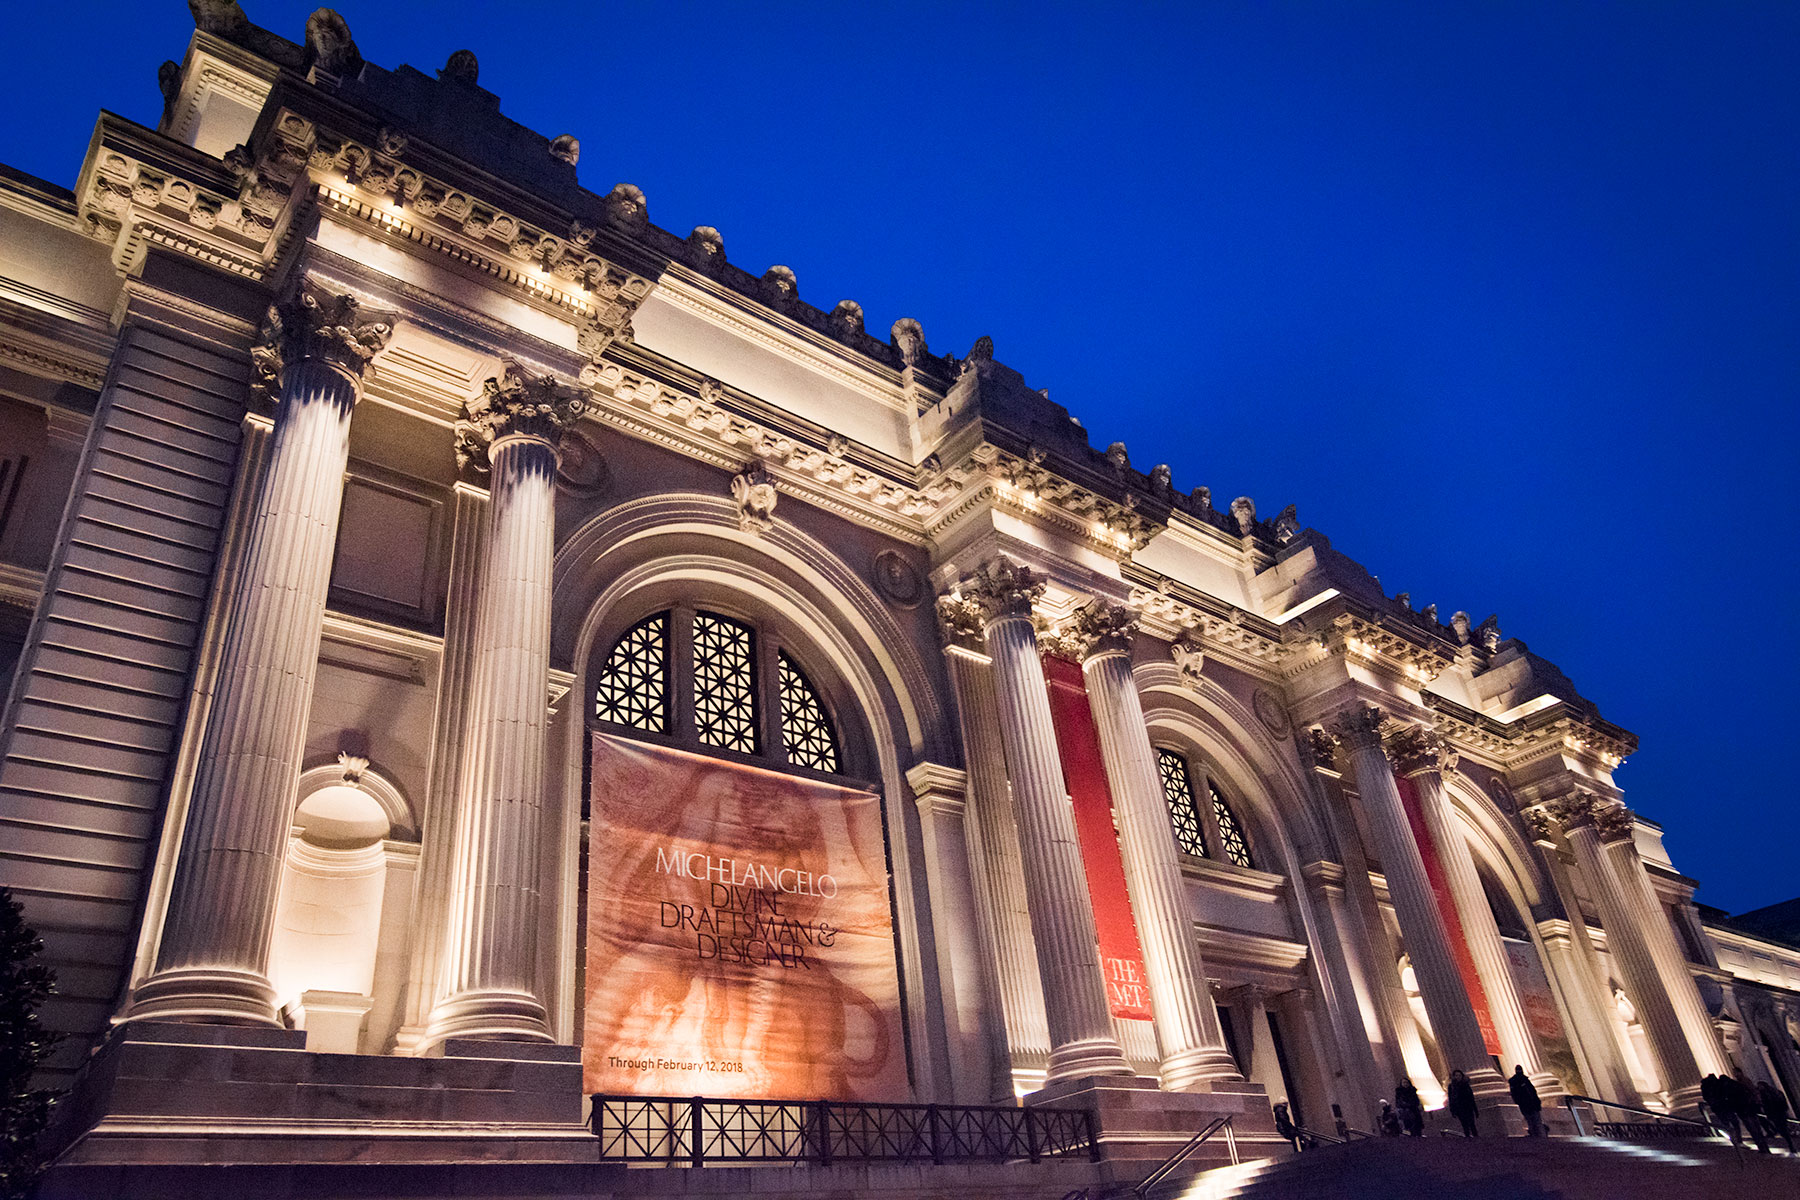 Metropolitan Museum facade at night during the Michelangelo exhibit